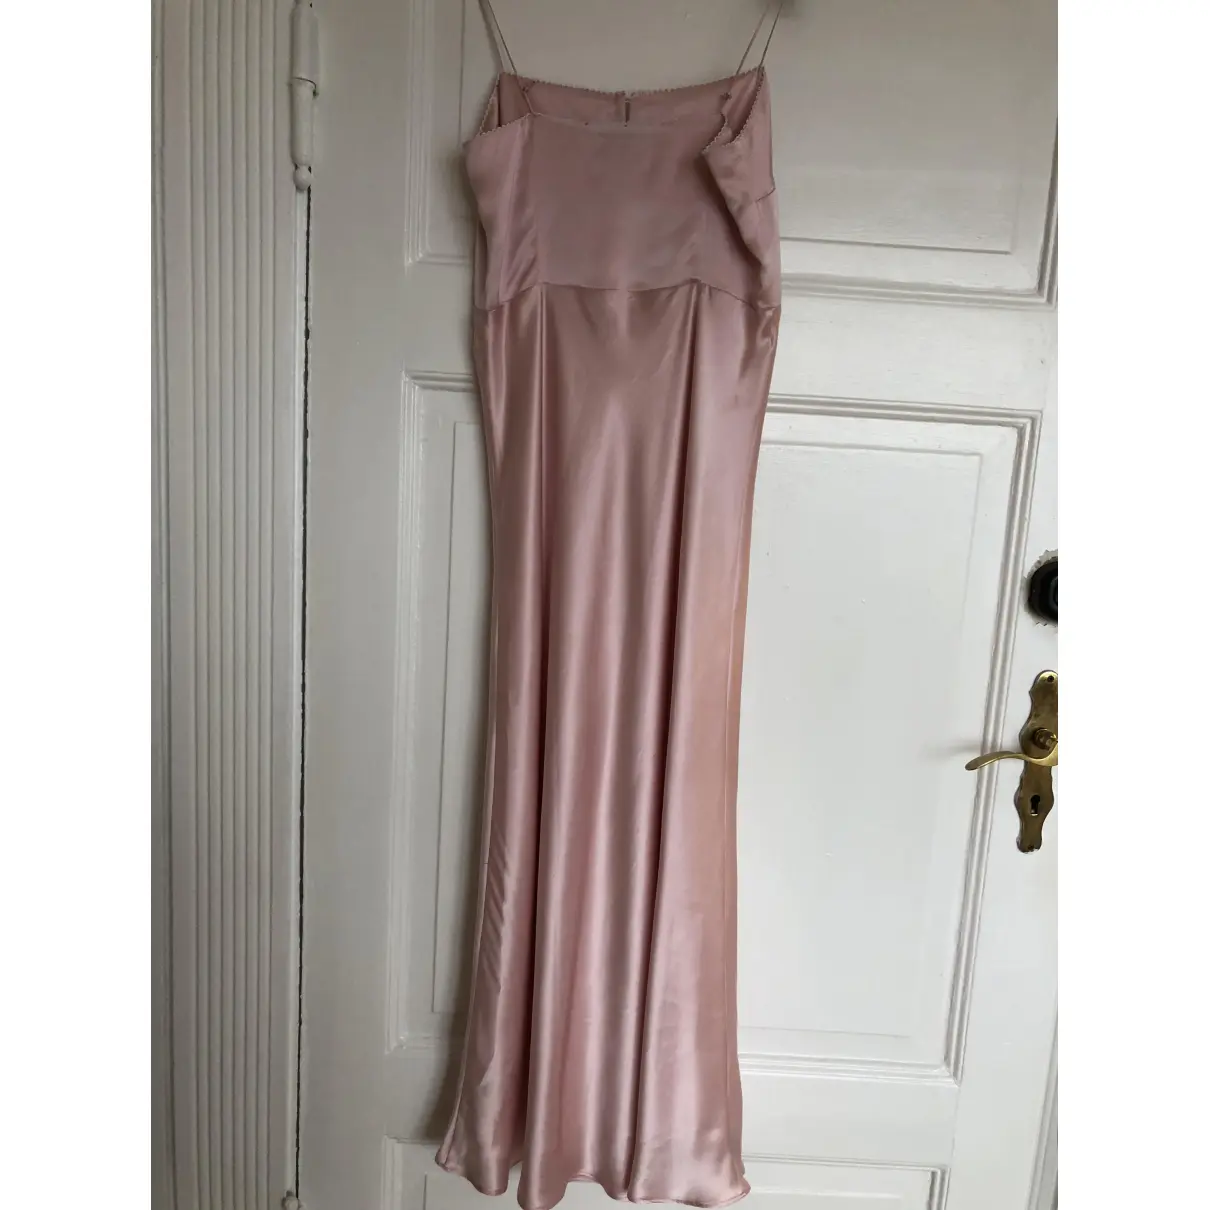 Buy Bernadette Silk mid-length dress online